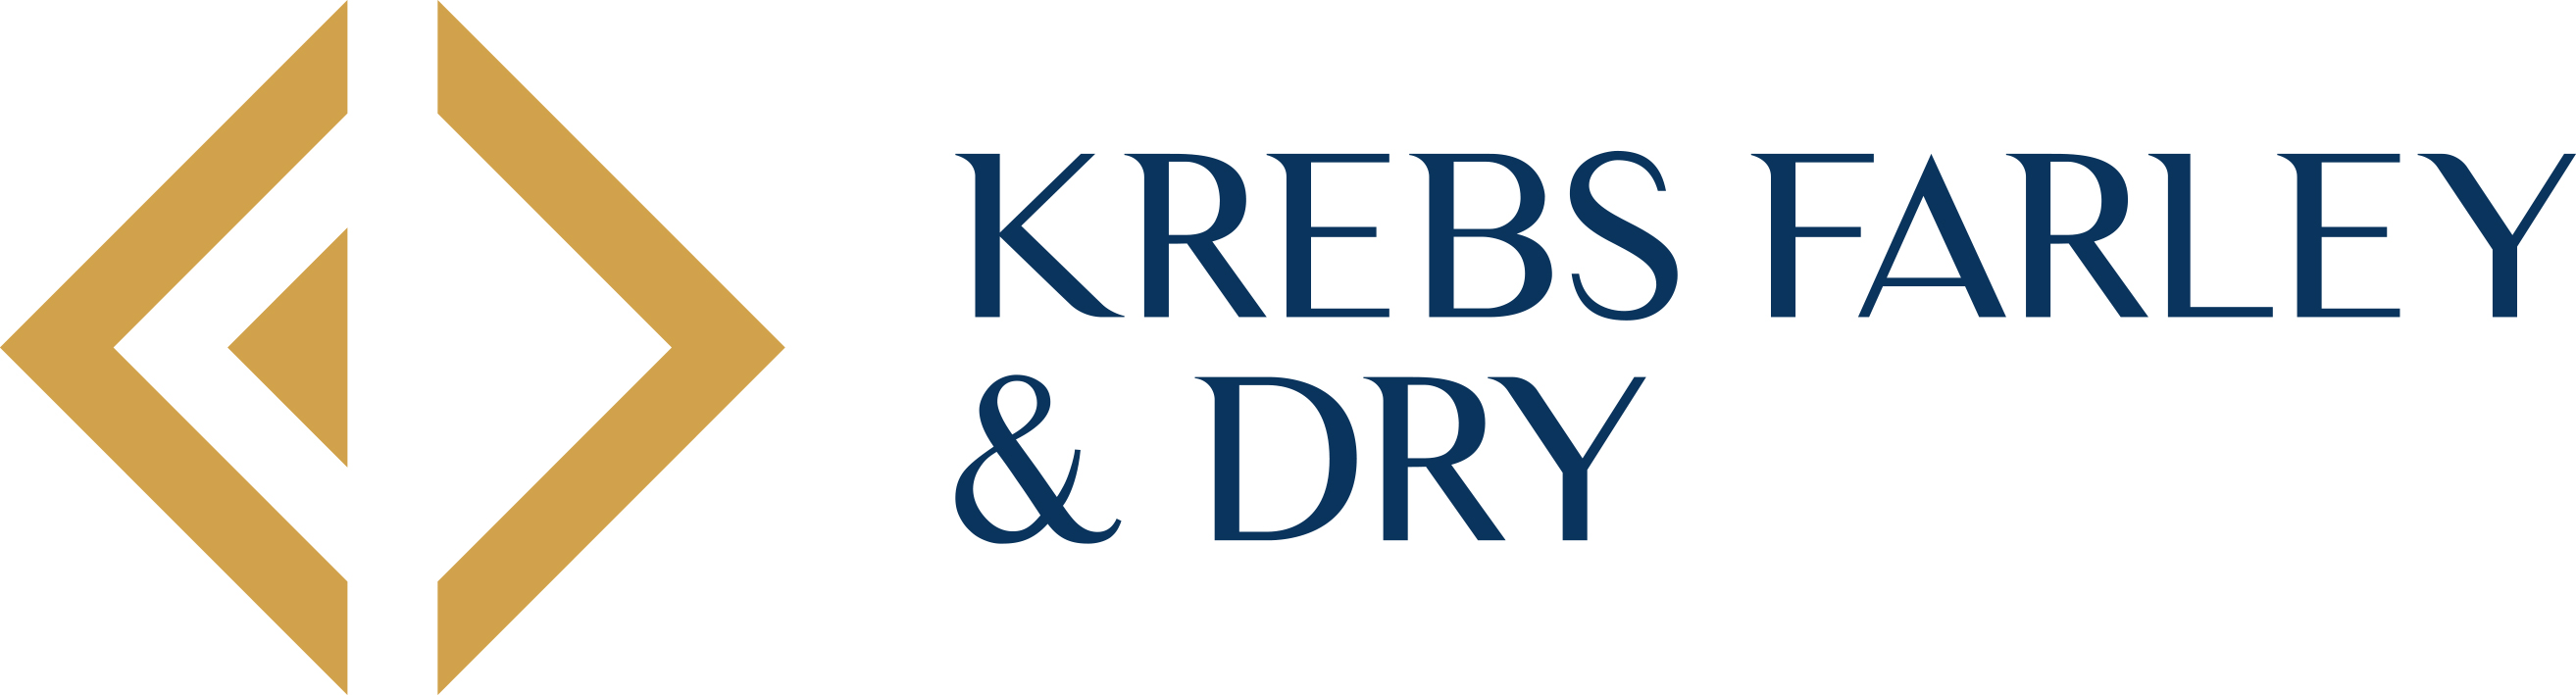 Krebs Farley & Dry logo